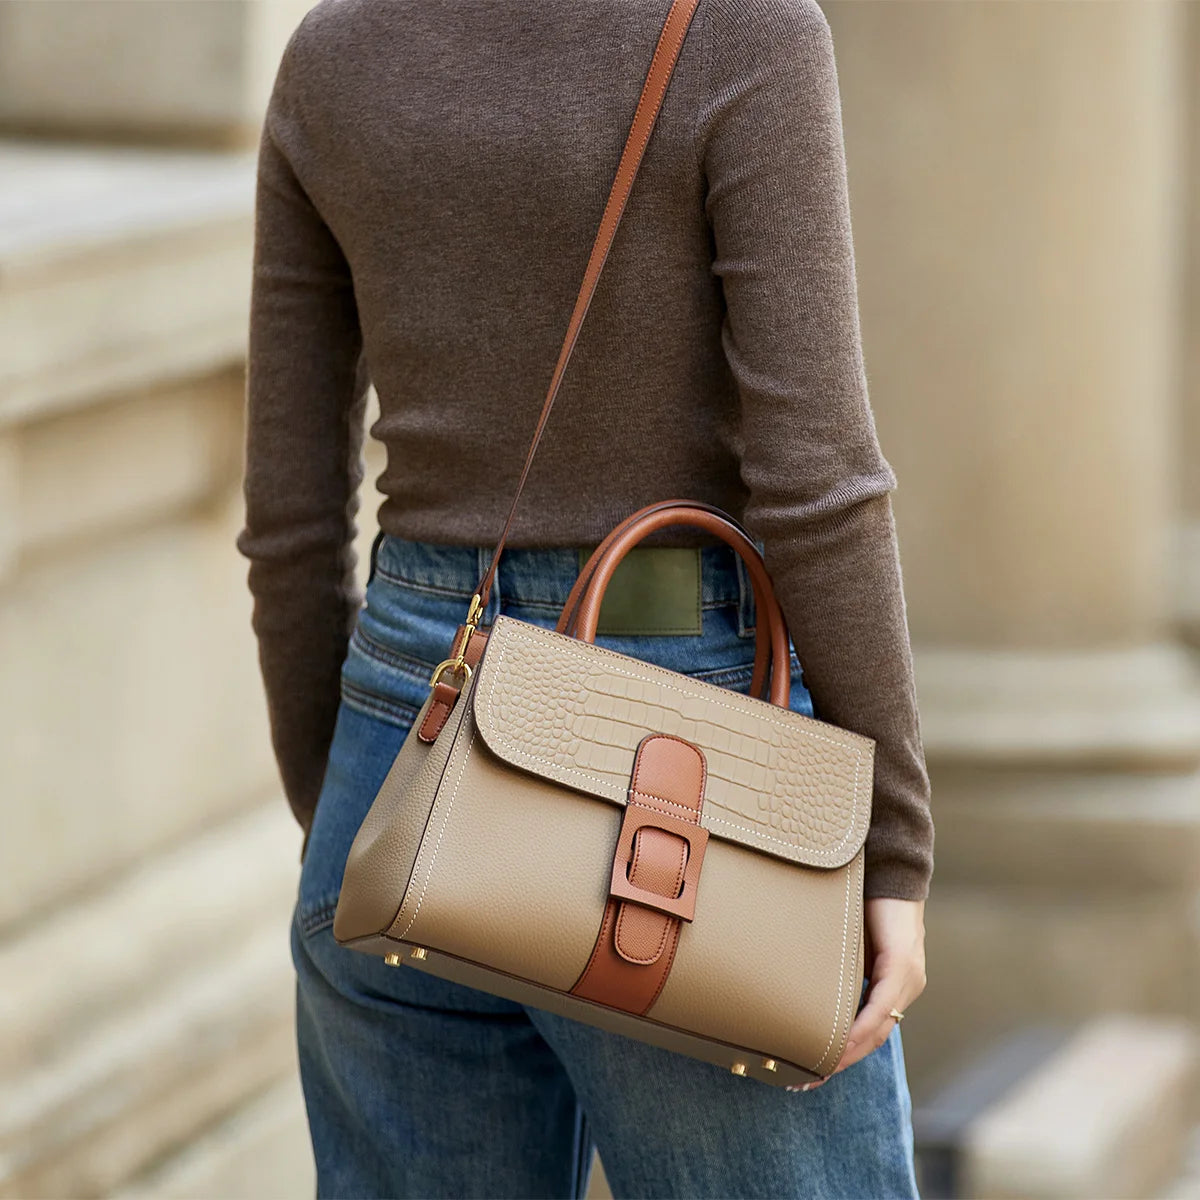 KIMLUD, ZOOLER 100% Genuine Leather Women's Handbags Cover Lock Shoulder Messenger Bags Super Soft Skin Ladies Purses Winter#YC356, APRICOT / CHINA, KIMLUD Womens Clothes